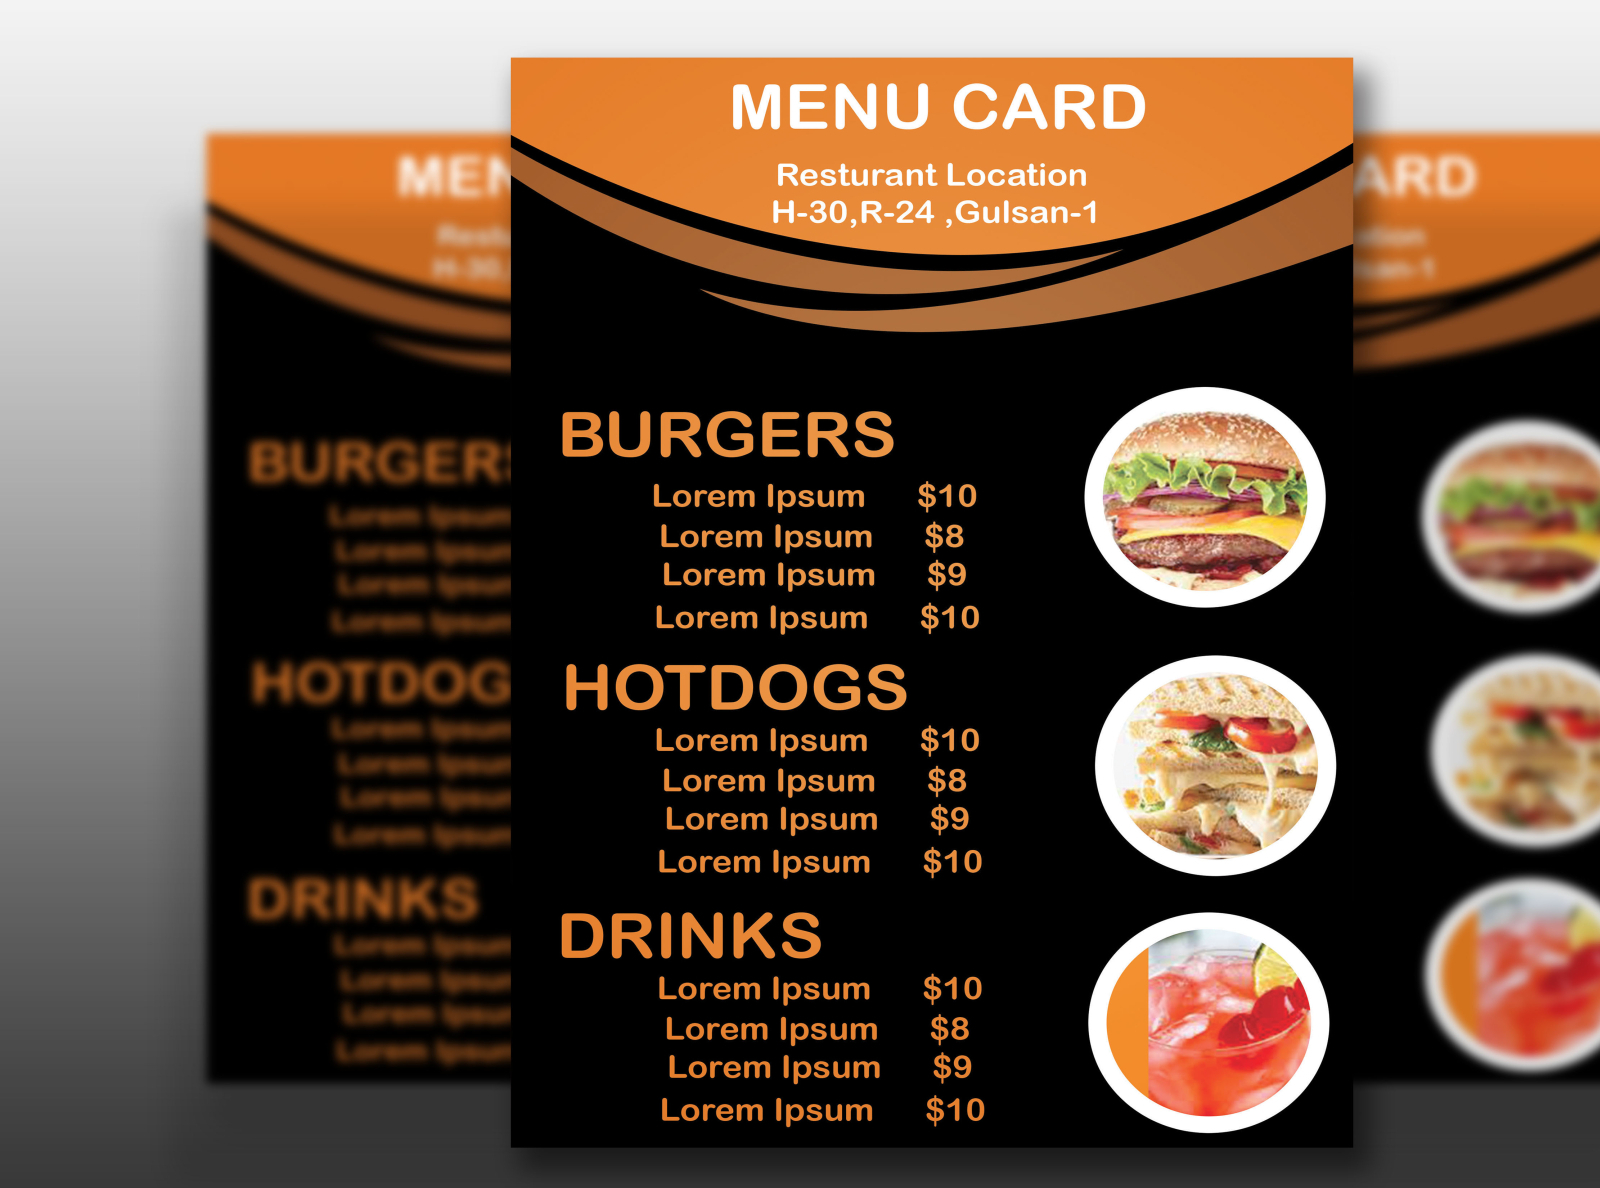 restaurant-menu-card-by-md-jahirul-islam-on-dribbble